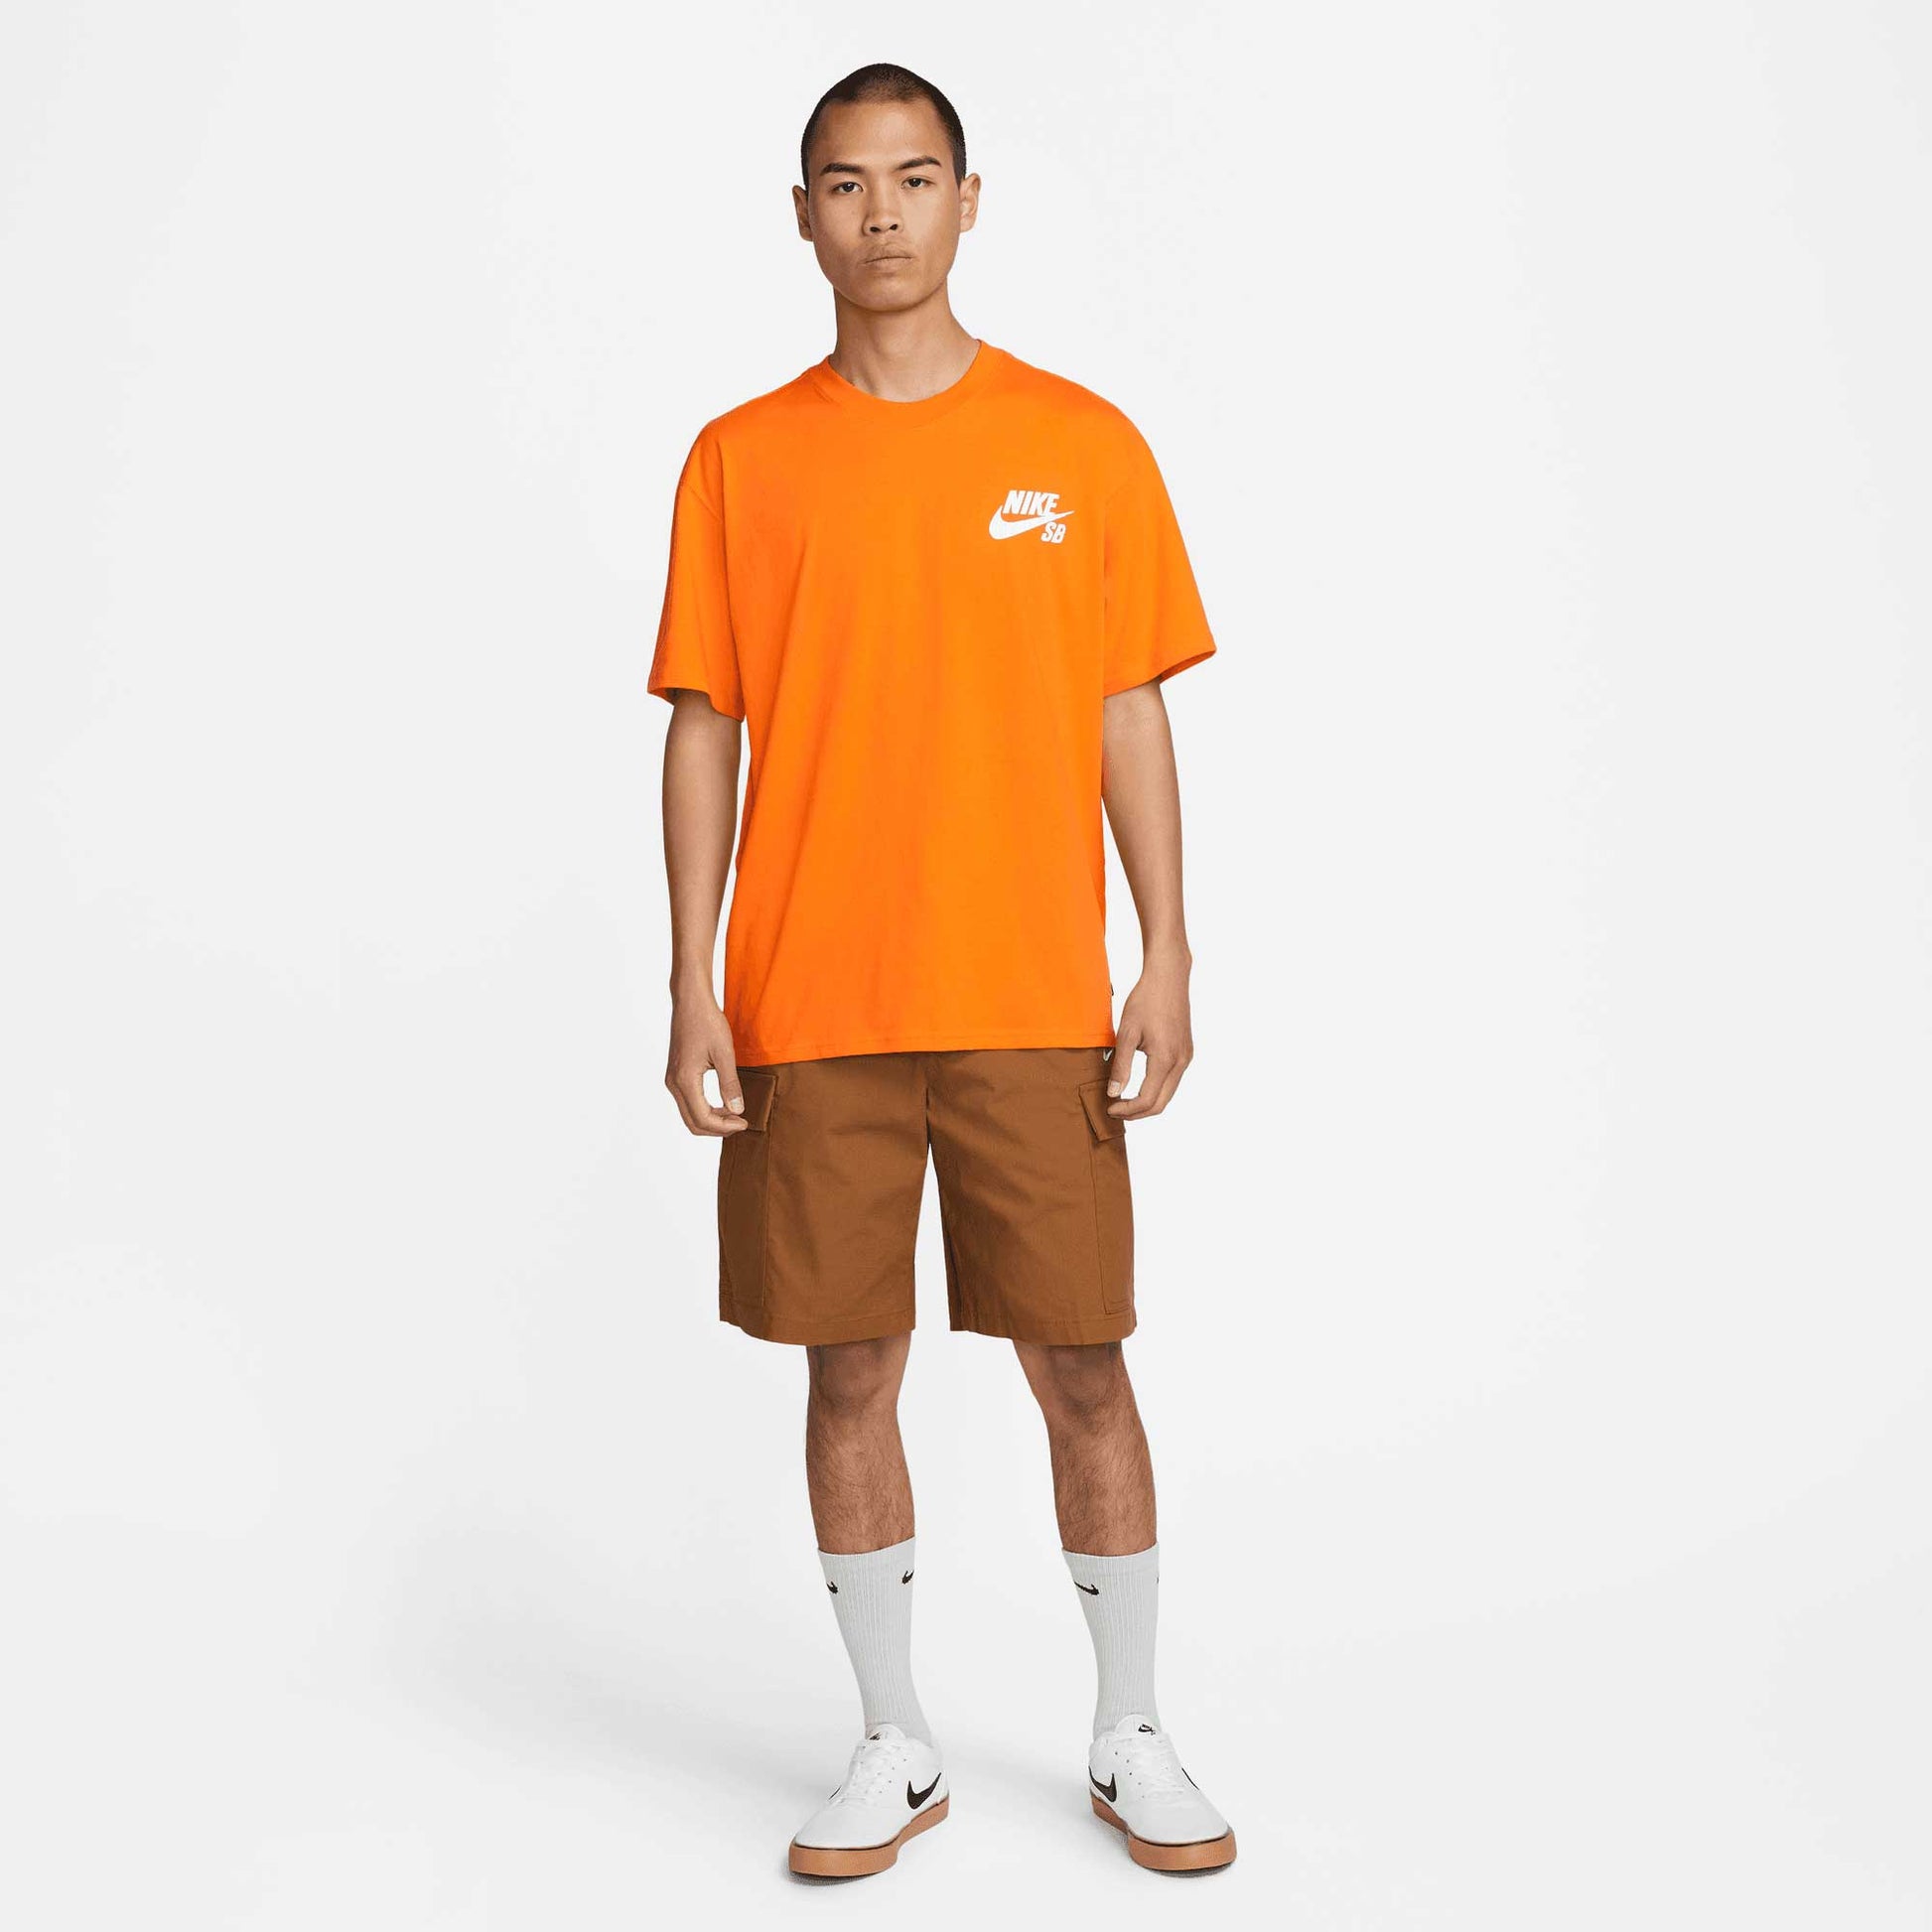 Nike SB Logo Skate T-Shirt, safety orange - Tiki Room Skateboards - 2